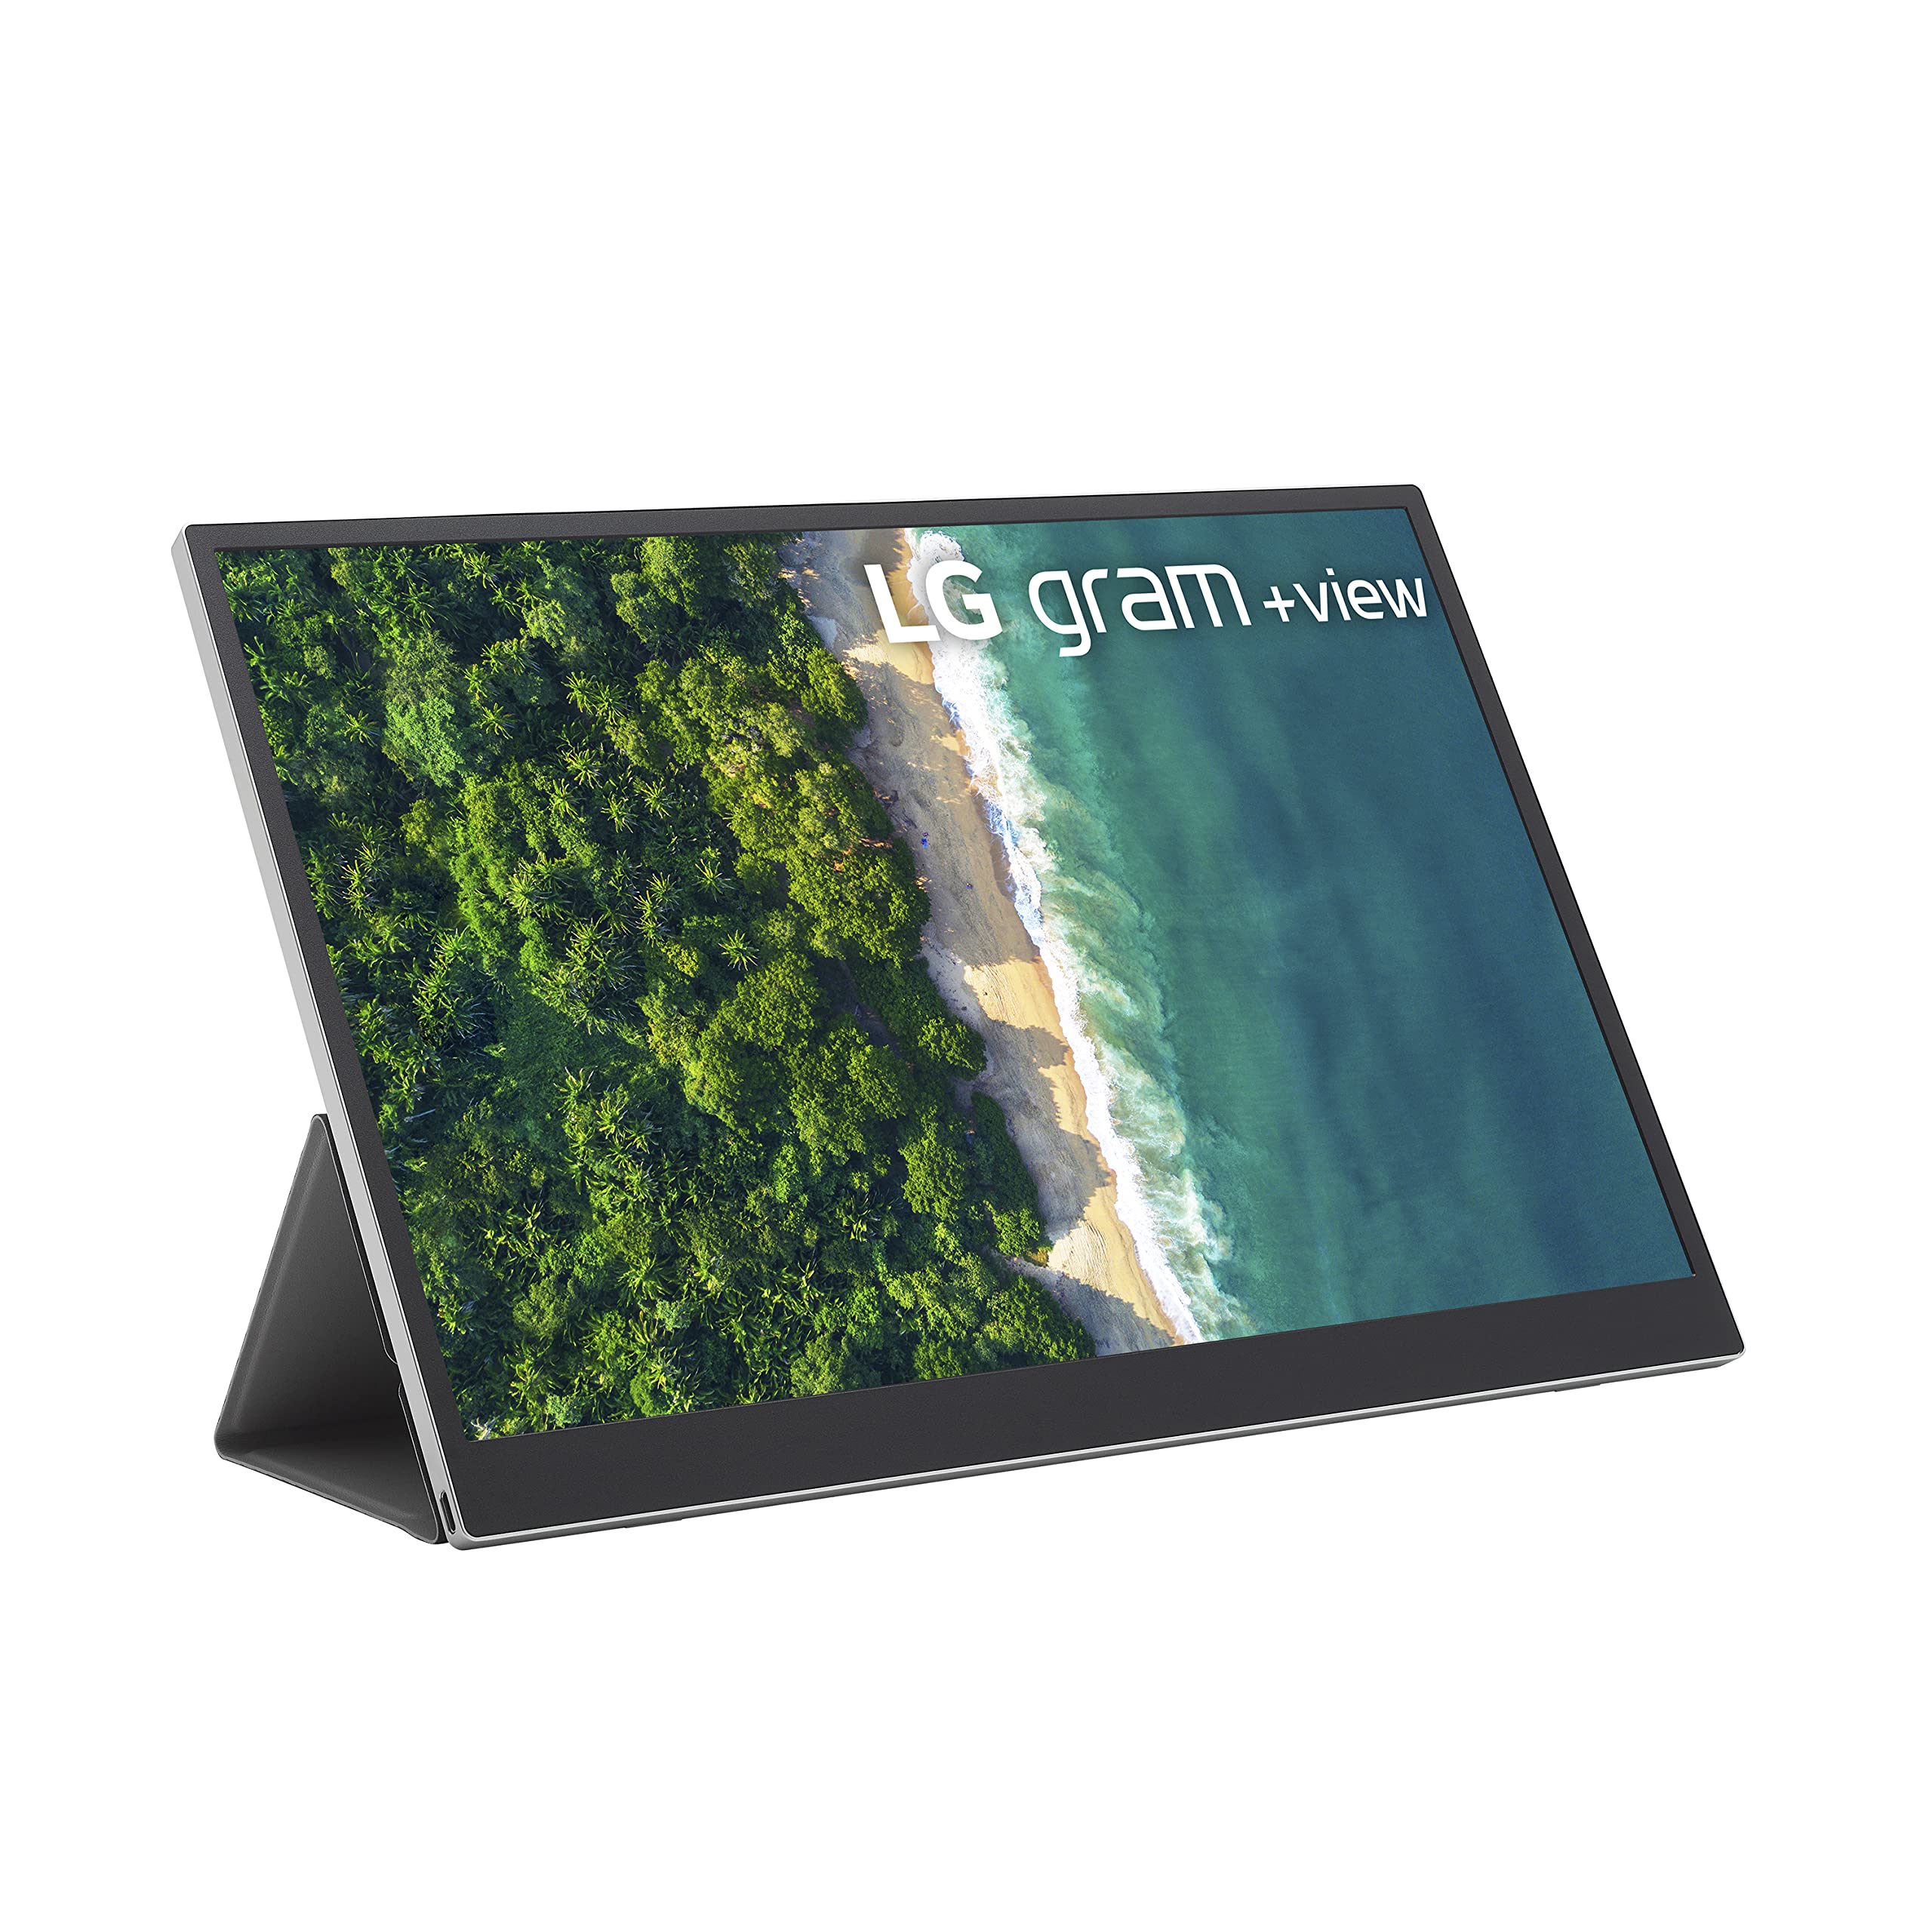 LG Gram +View 16 Inch Portable WQXGA (2560 x 1600) IPS Monitor, 16:10 Aspect Ratio, DCI-P3 99% Color, USB-C Connectivity, Landscape & Portrait Orientation, with Folio Cover/Stand (16MQ70.ADSU1)